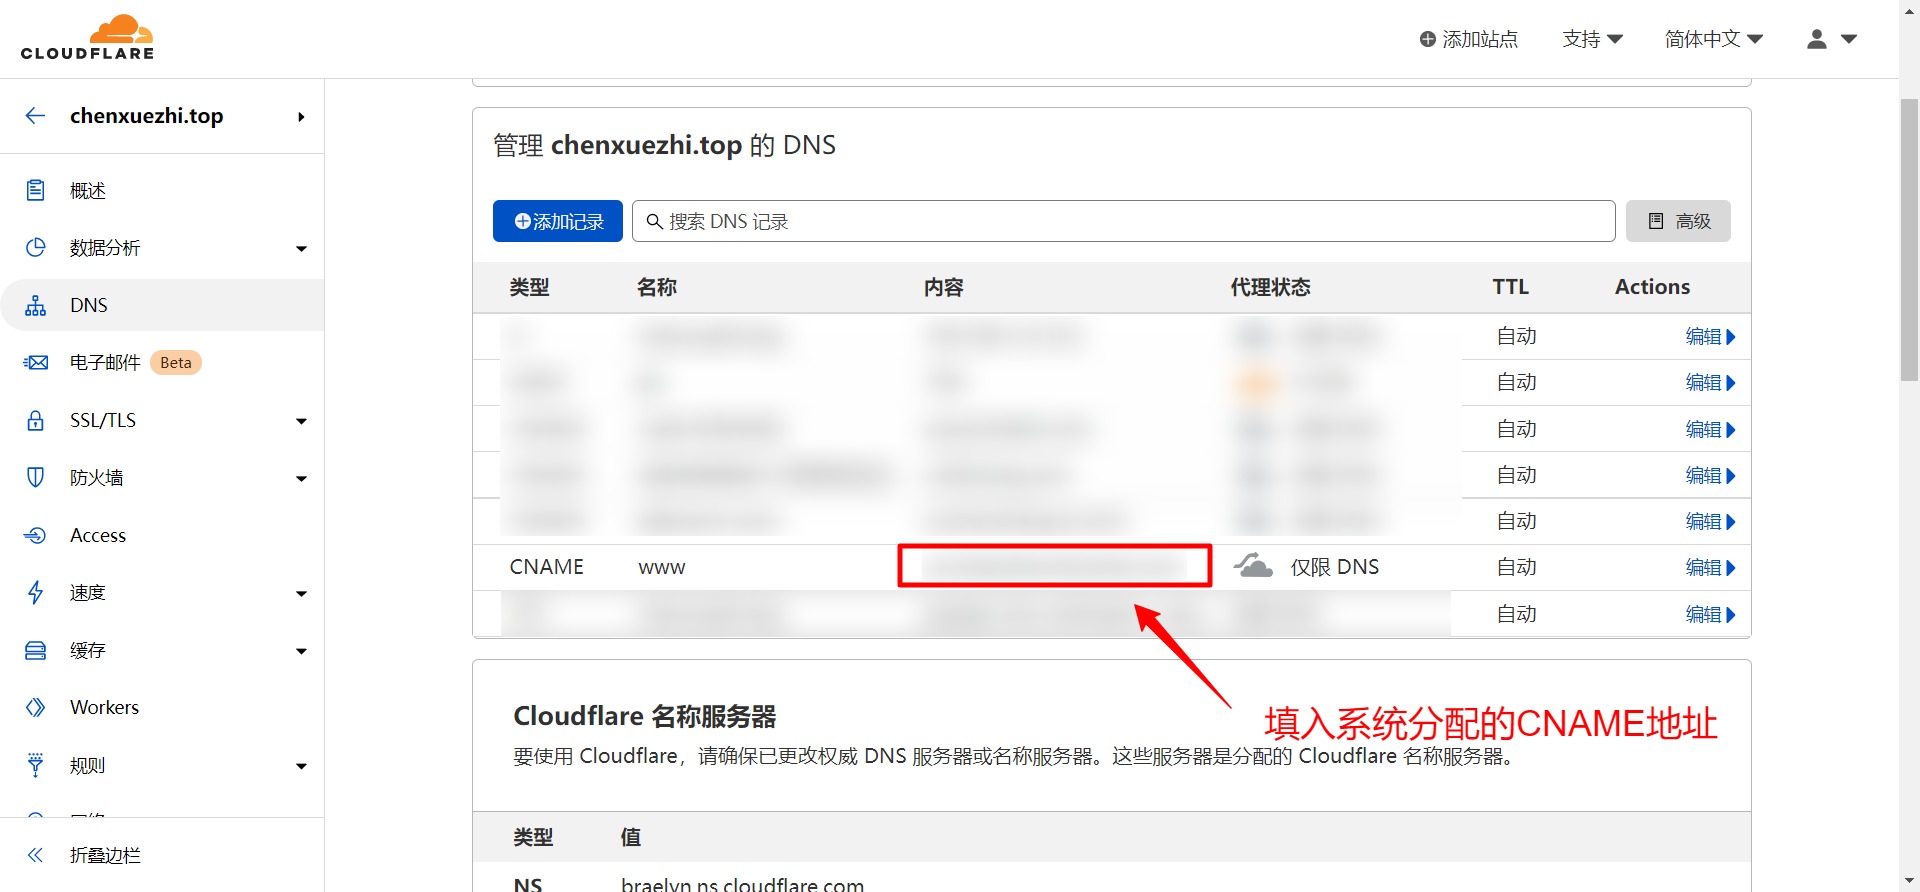 DNS-chenxuezhi-top-1986994368-qq-com-s-Account-Cloudflare